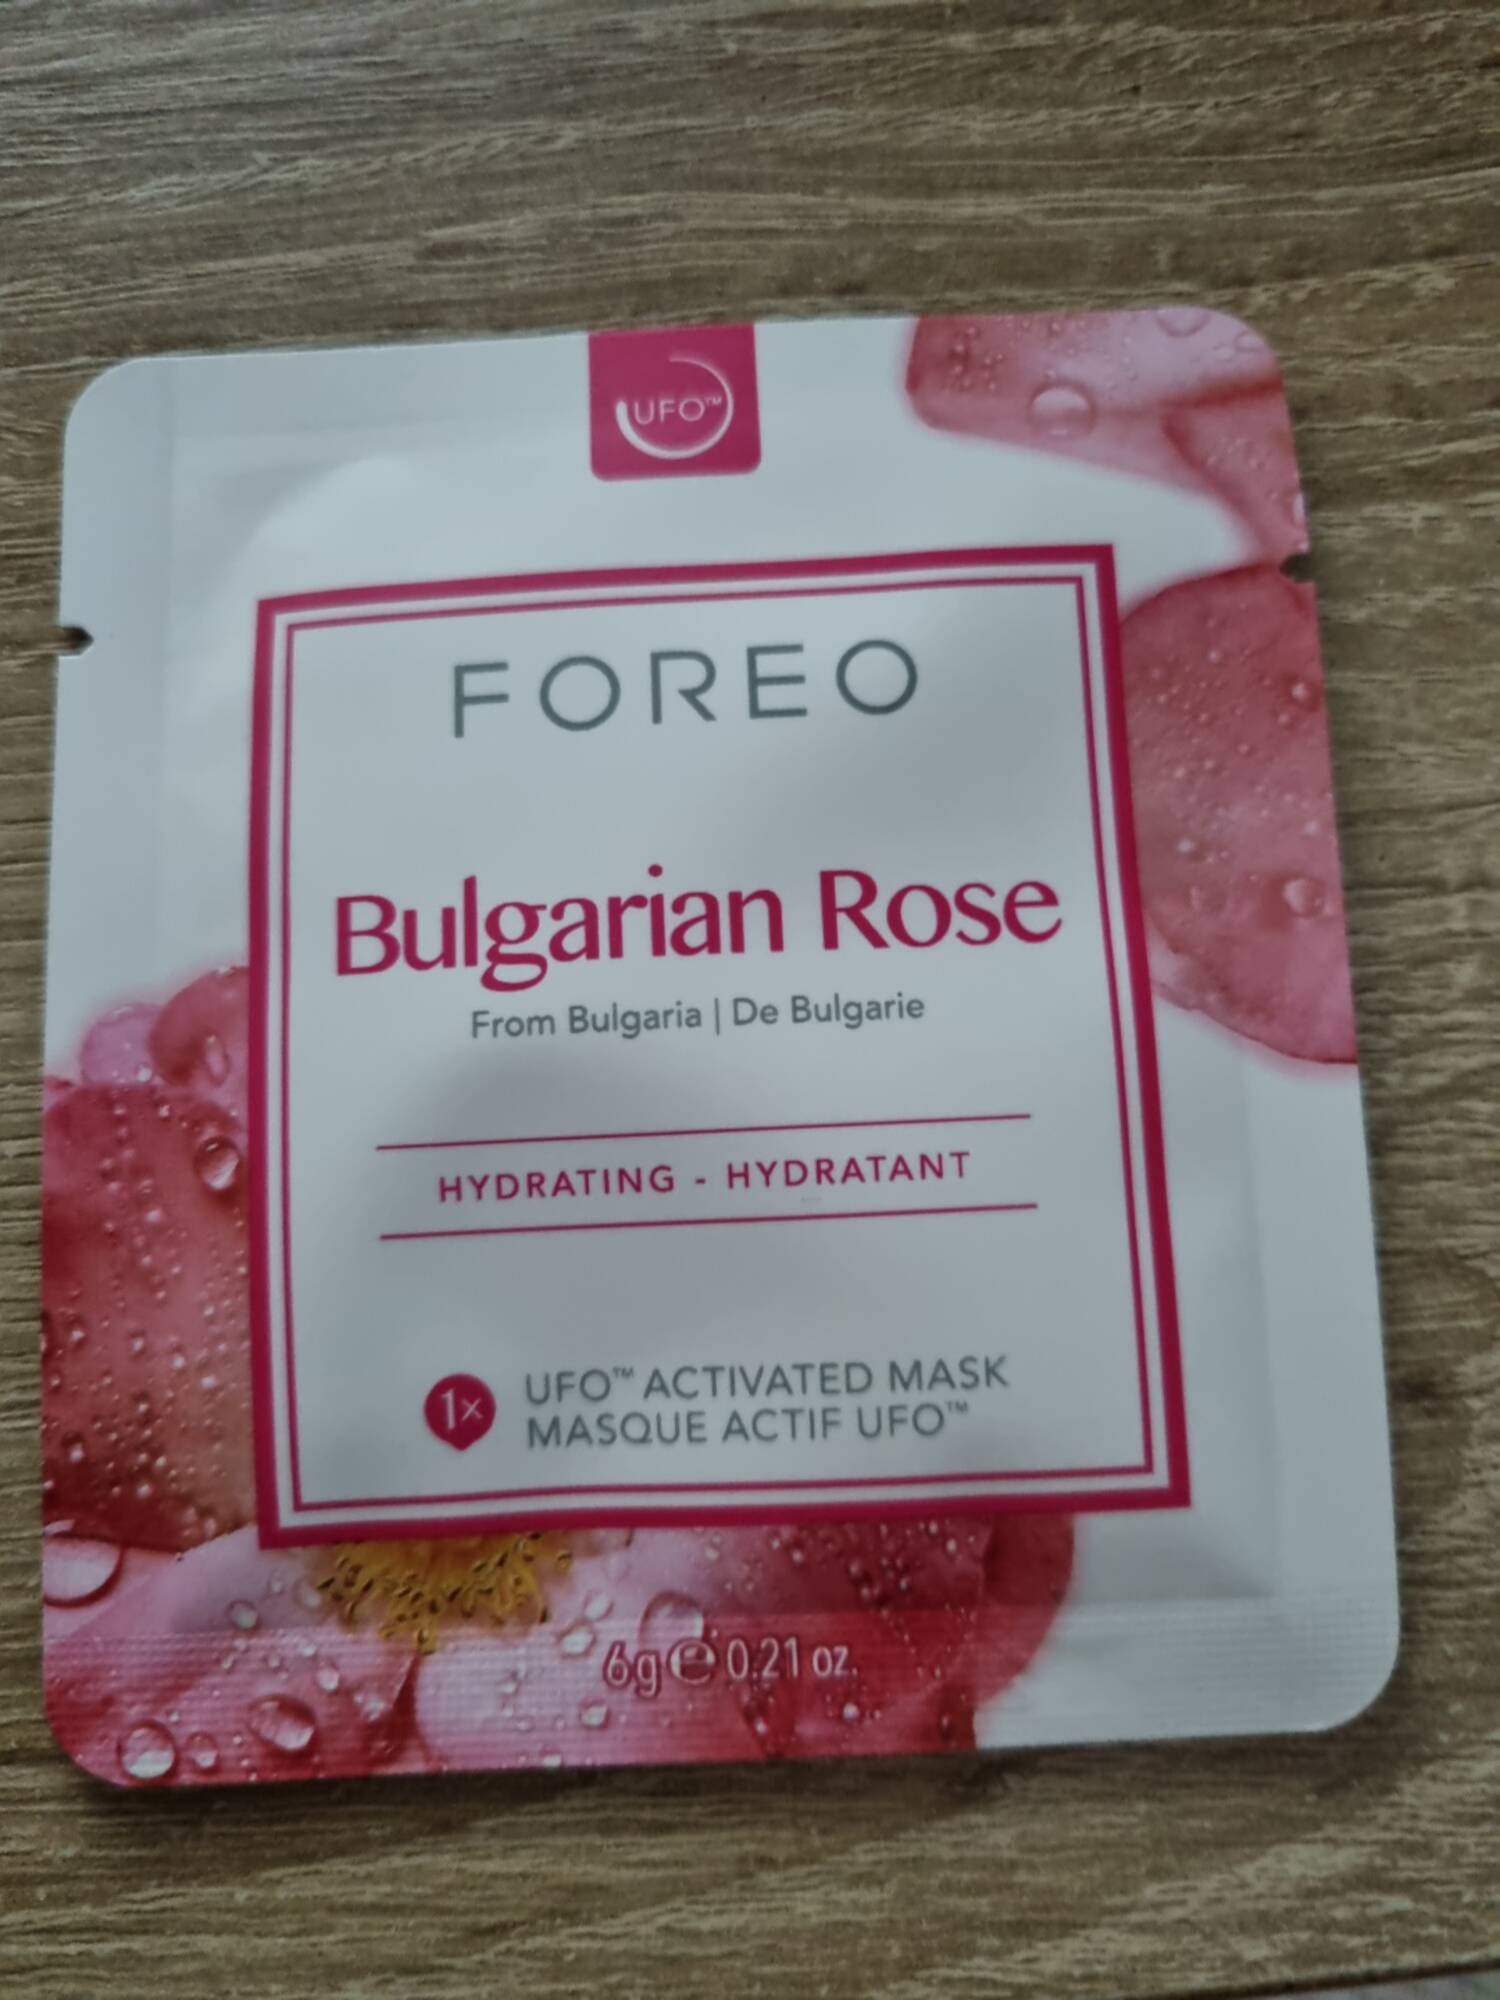 FOREO - Bulgarian Rose - Masque actif UFO